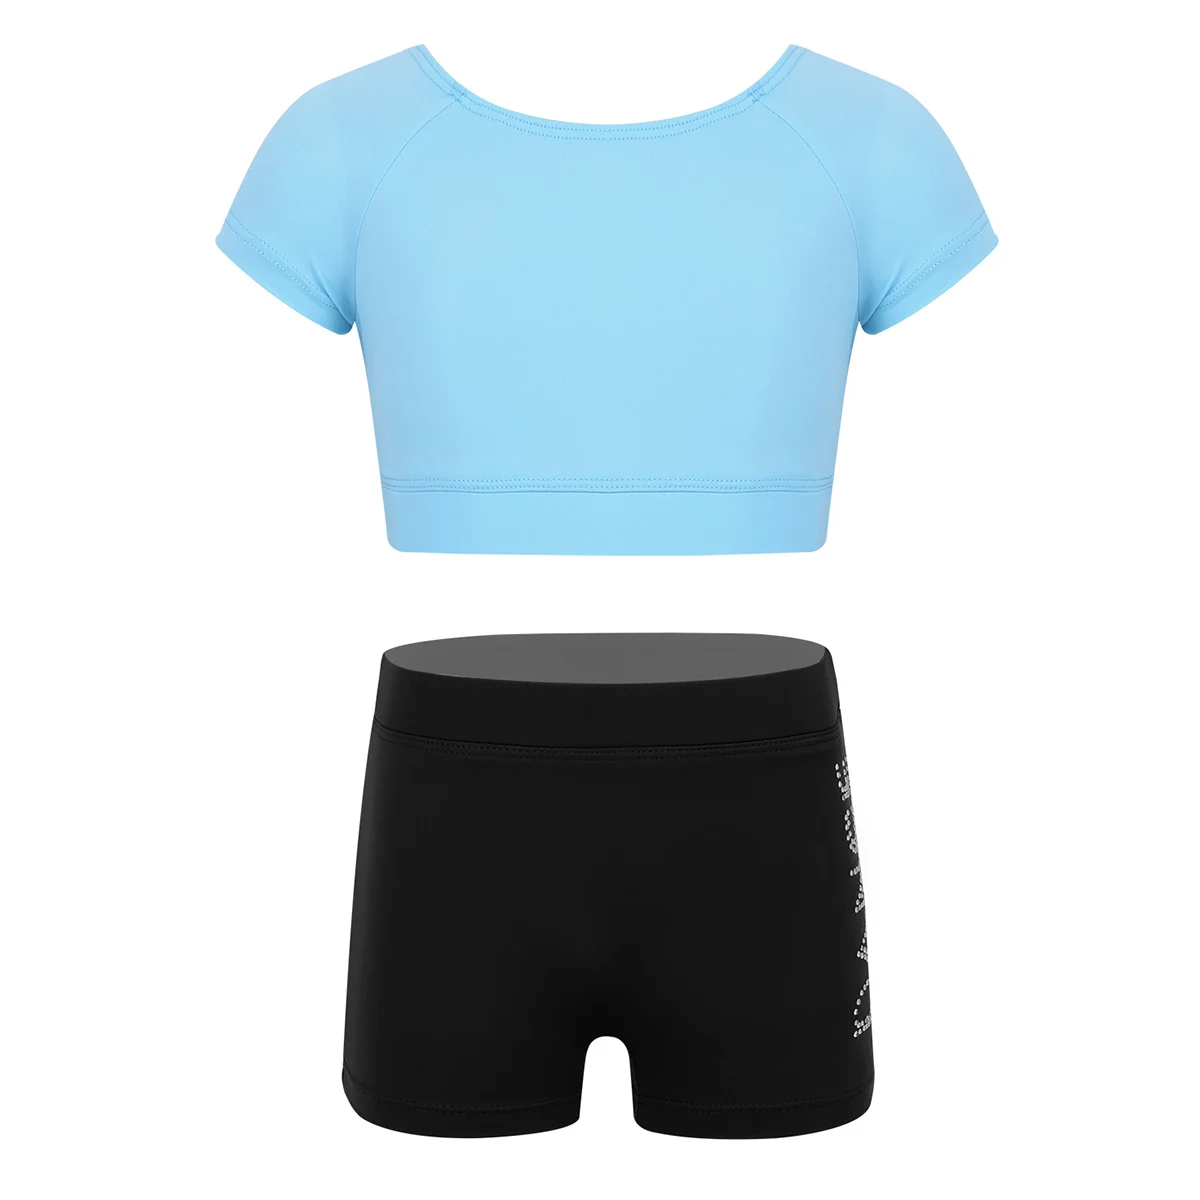 

Kids Girls Tankini Swimsuits Outfit Short Sleeves Swimwear Tank Top with Bottoms Shorts Gymnastics Ballet Leotard Dancewear